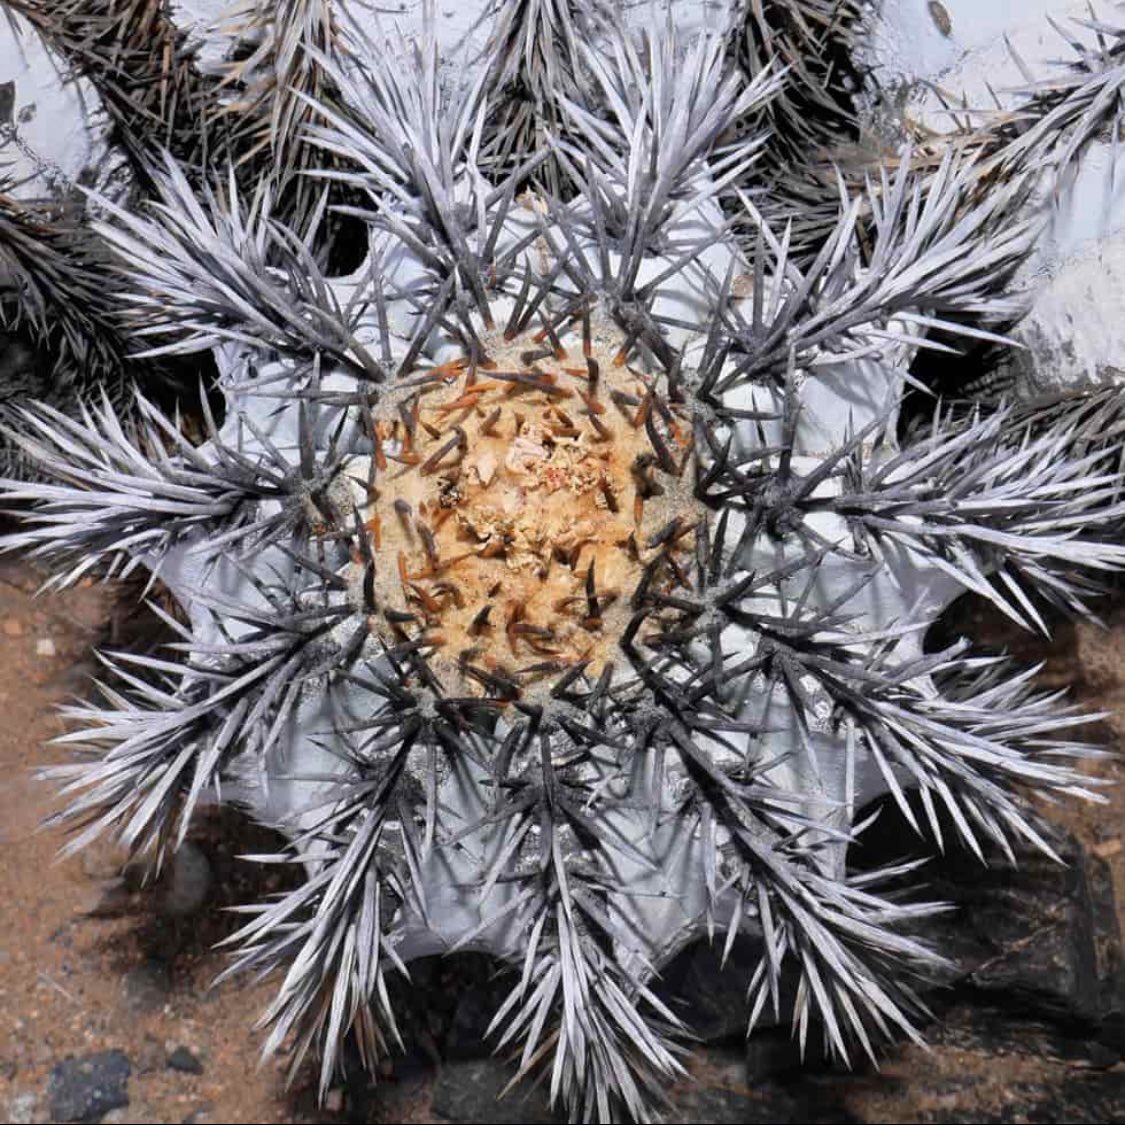 #Copiapoa atacamensis - one of my personal favourites! 

#cactus #cacti #cacto #spines #chile #chileflora #atacamadesert #desertplant